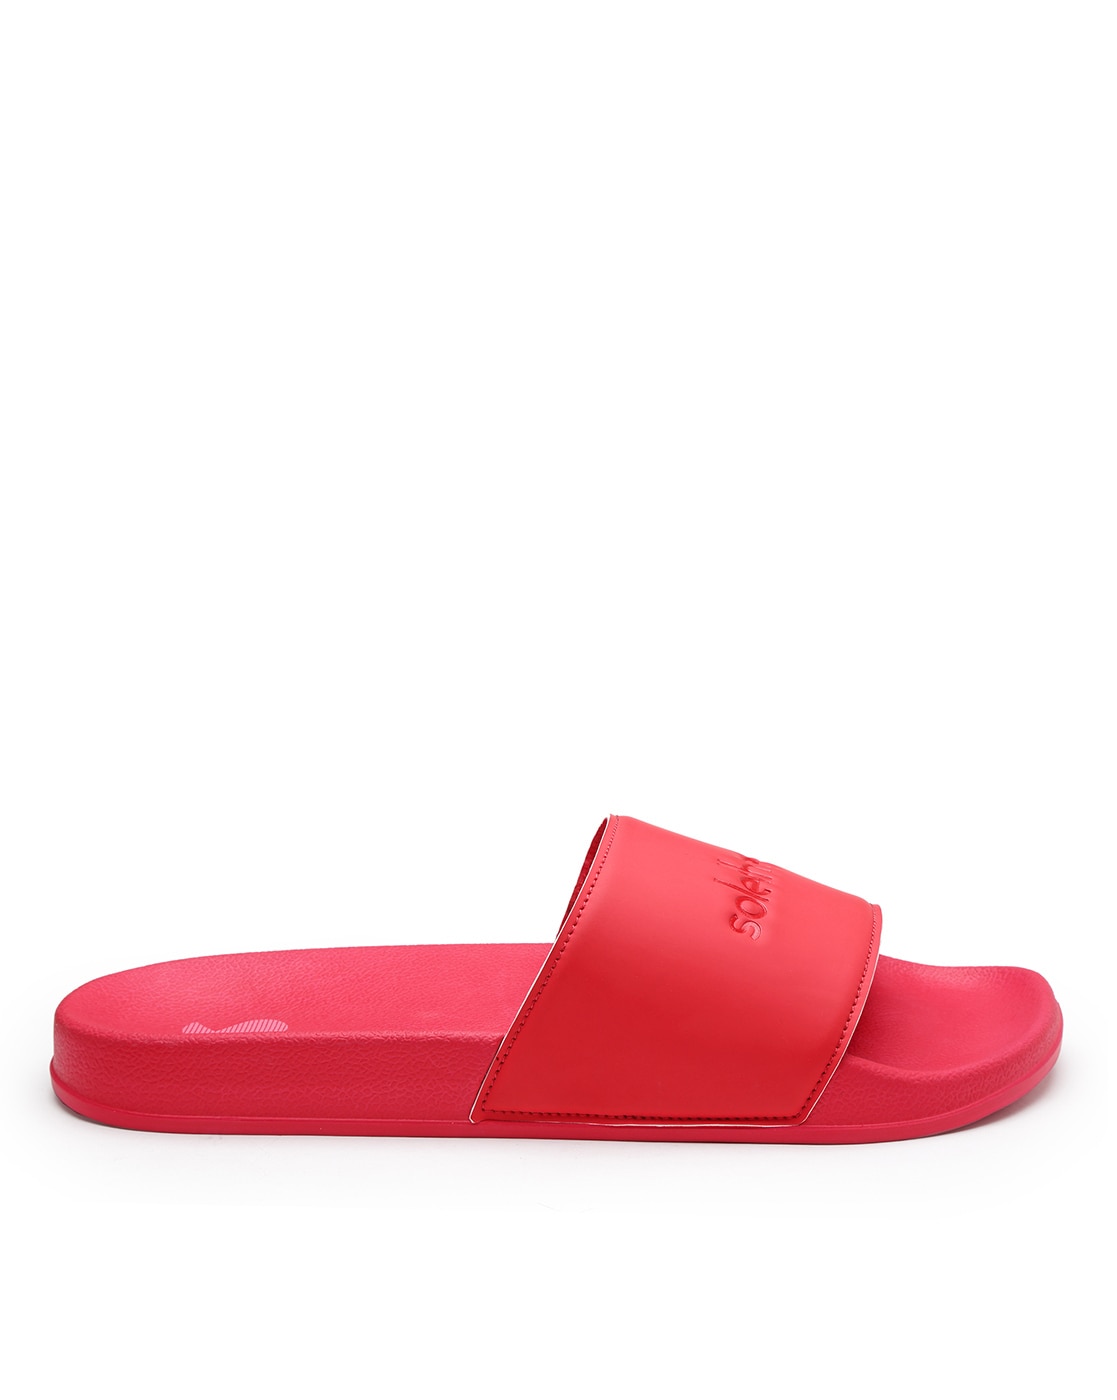 Red EVA Supreme Flip Flop Slipper, Size: 8